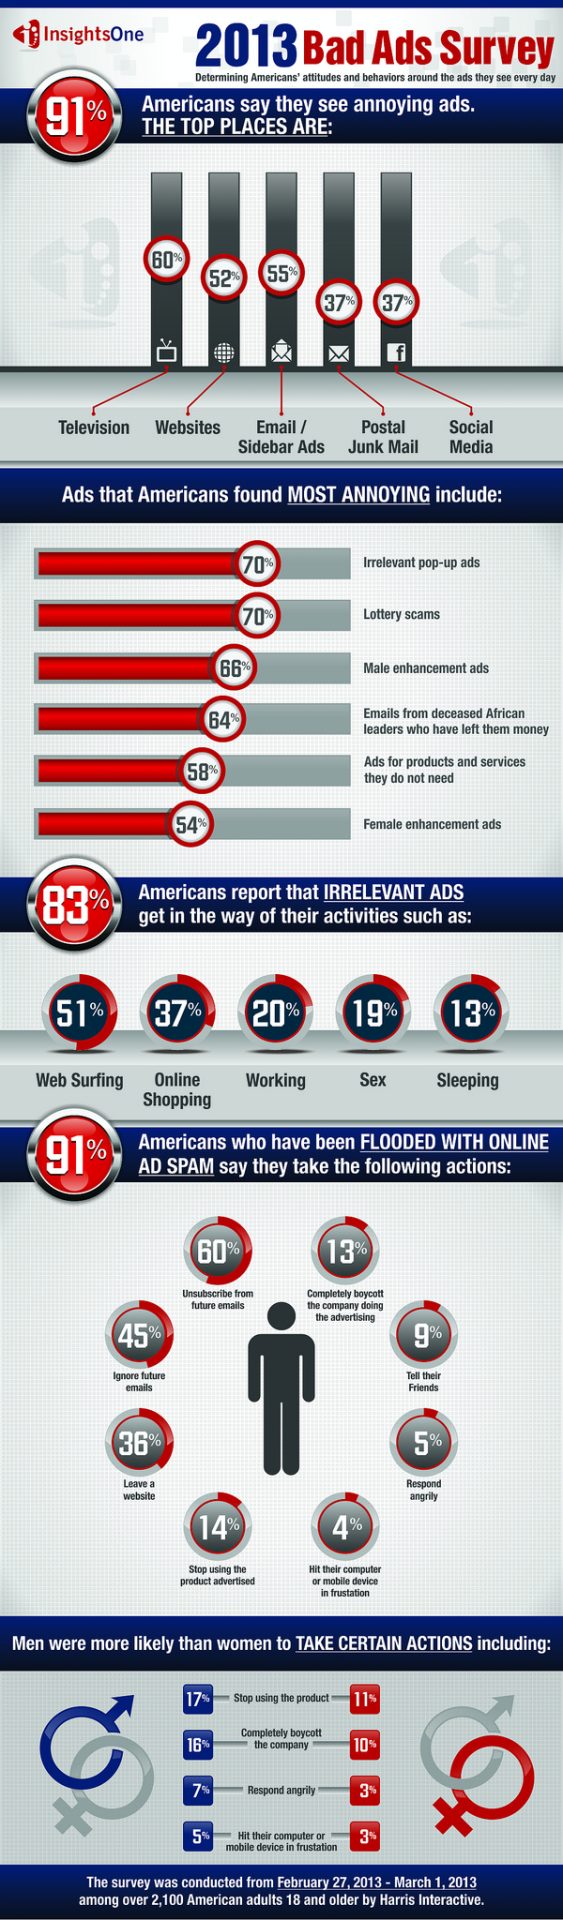 Bad Ads Survey 2013